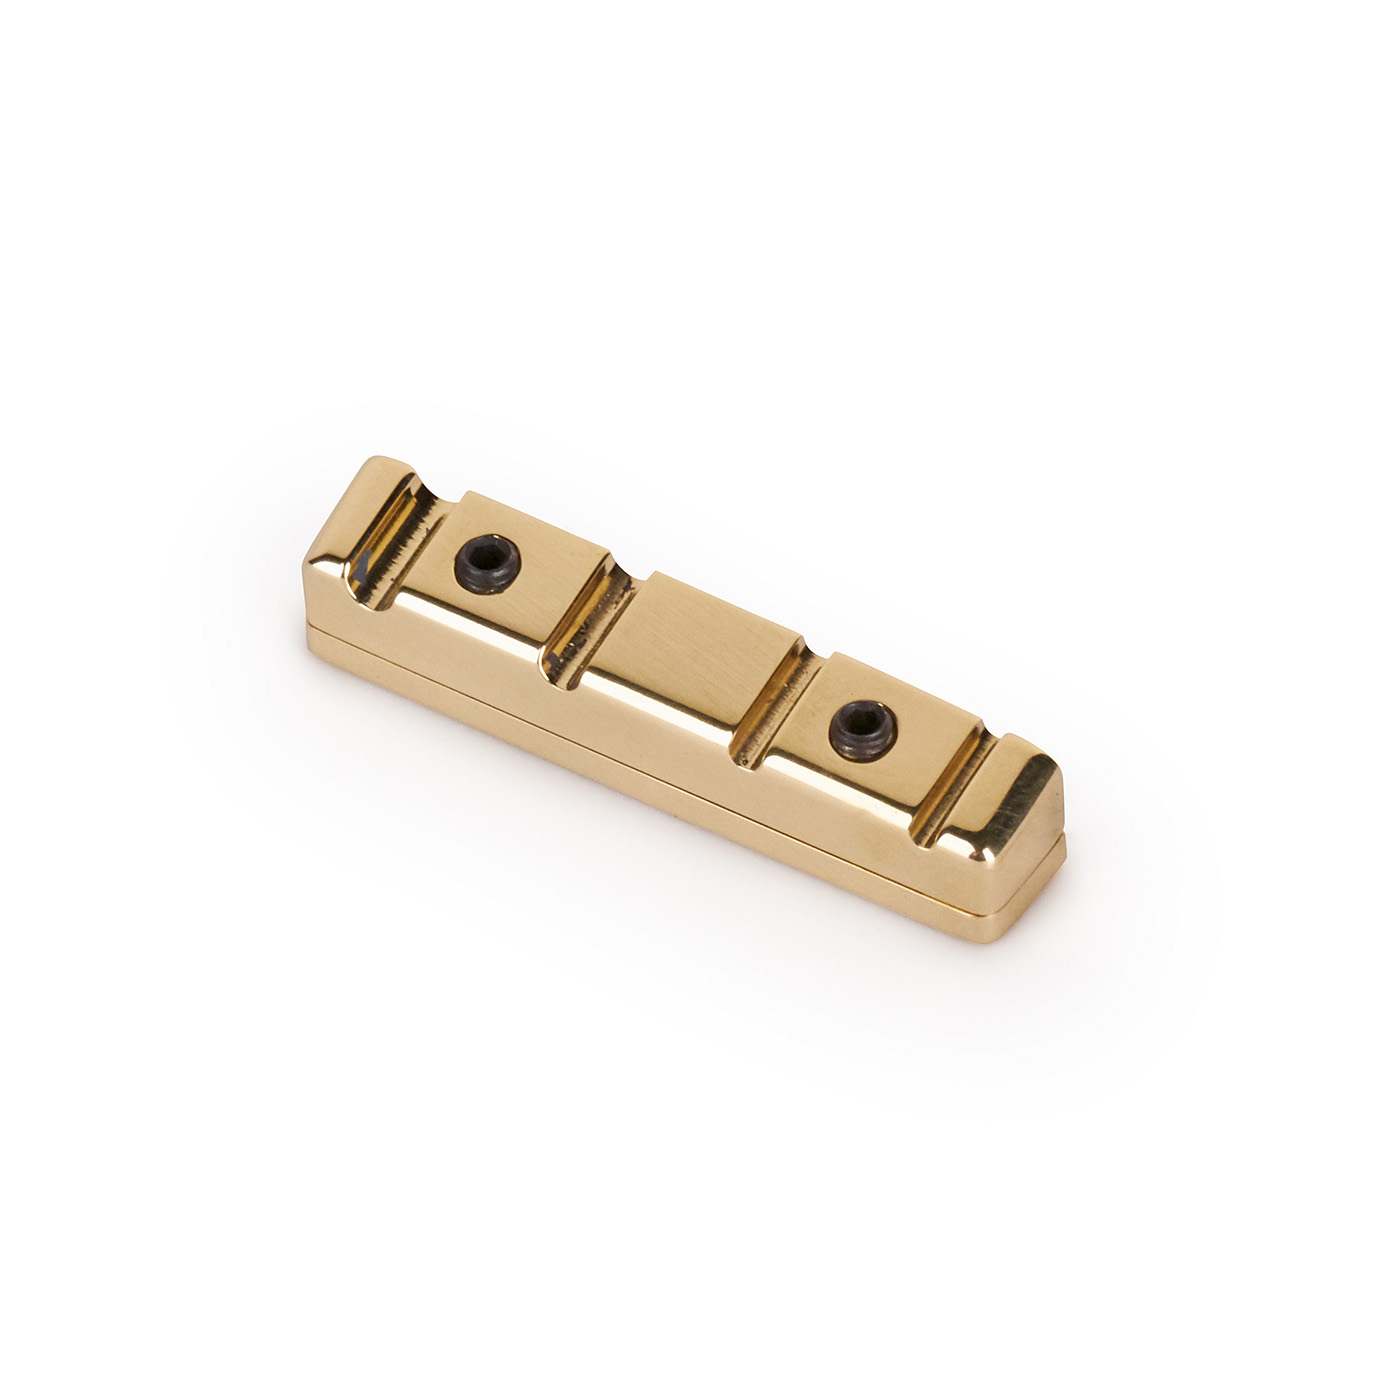 Warwick Parts - Just-A-Nut III, 4-String, Lefthand, 38.5 mm width - Brass